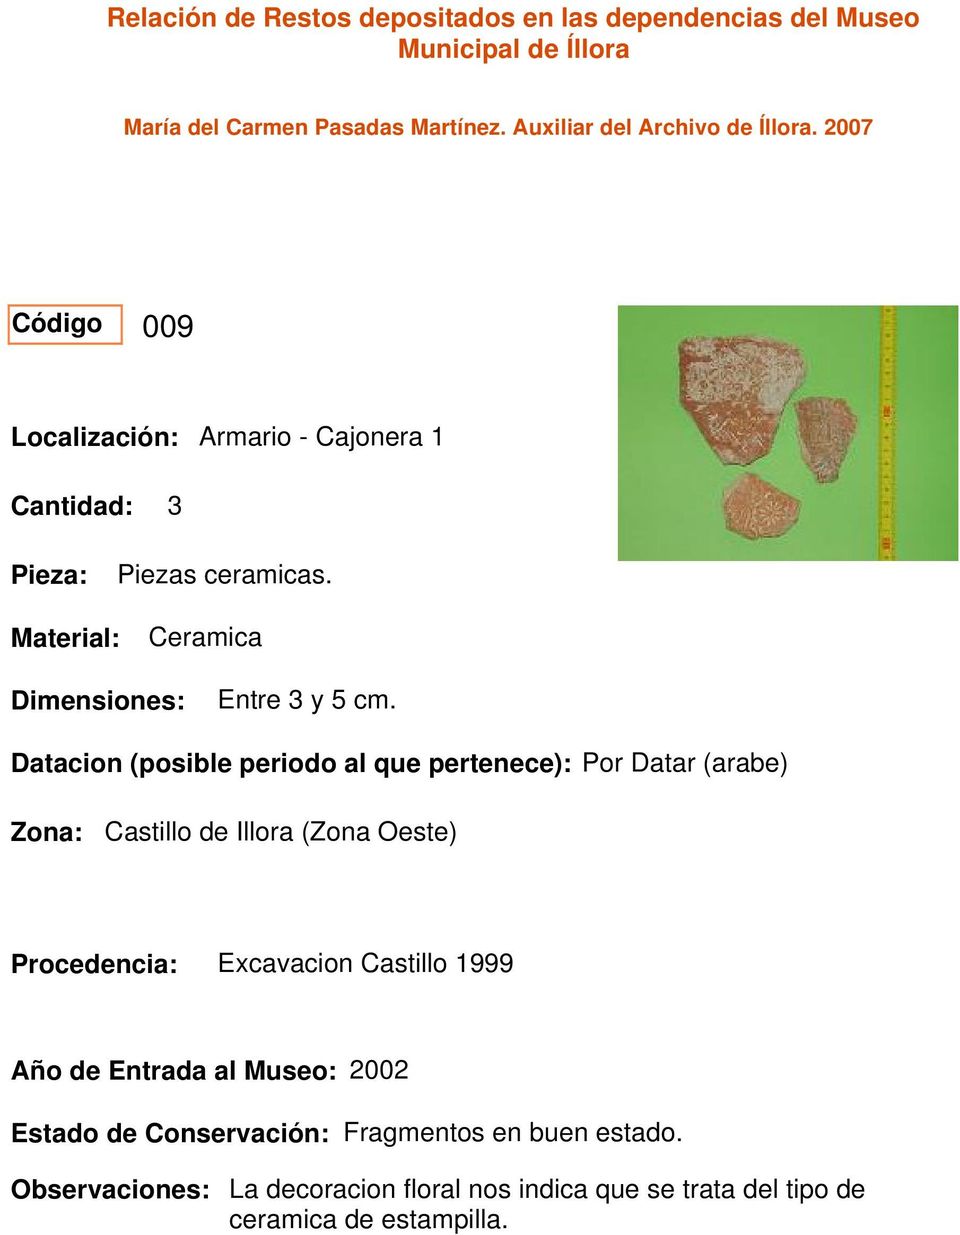 Datacion (posible periodo al que pertenece): Por Datar (arabe) Castillo de Illora (Zona